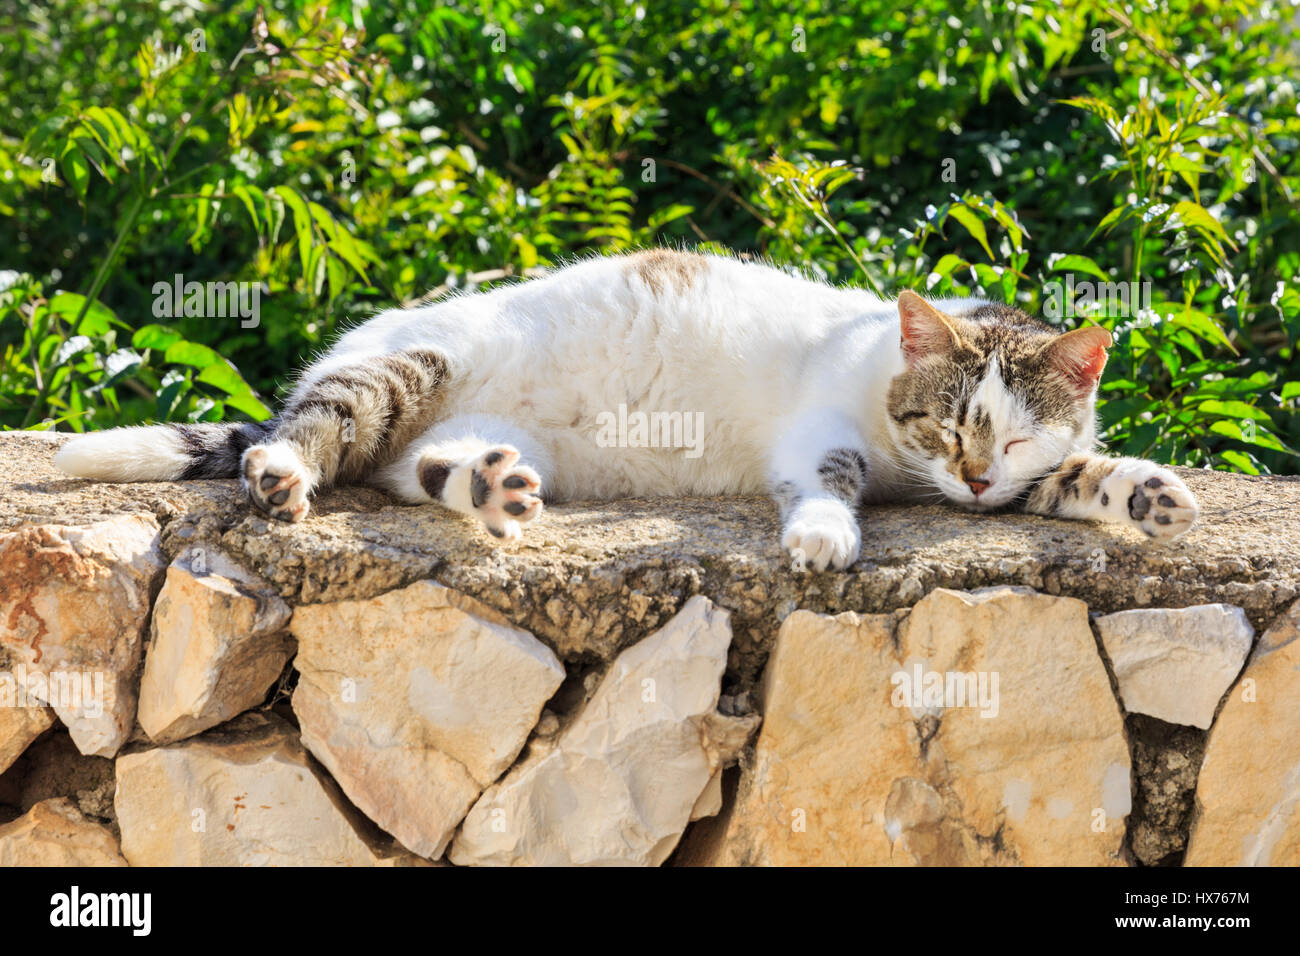 Street cat lazing on a stone wall Stock Photo